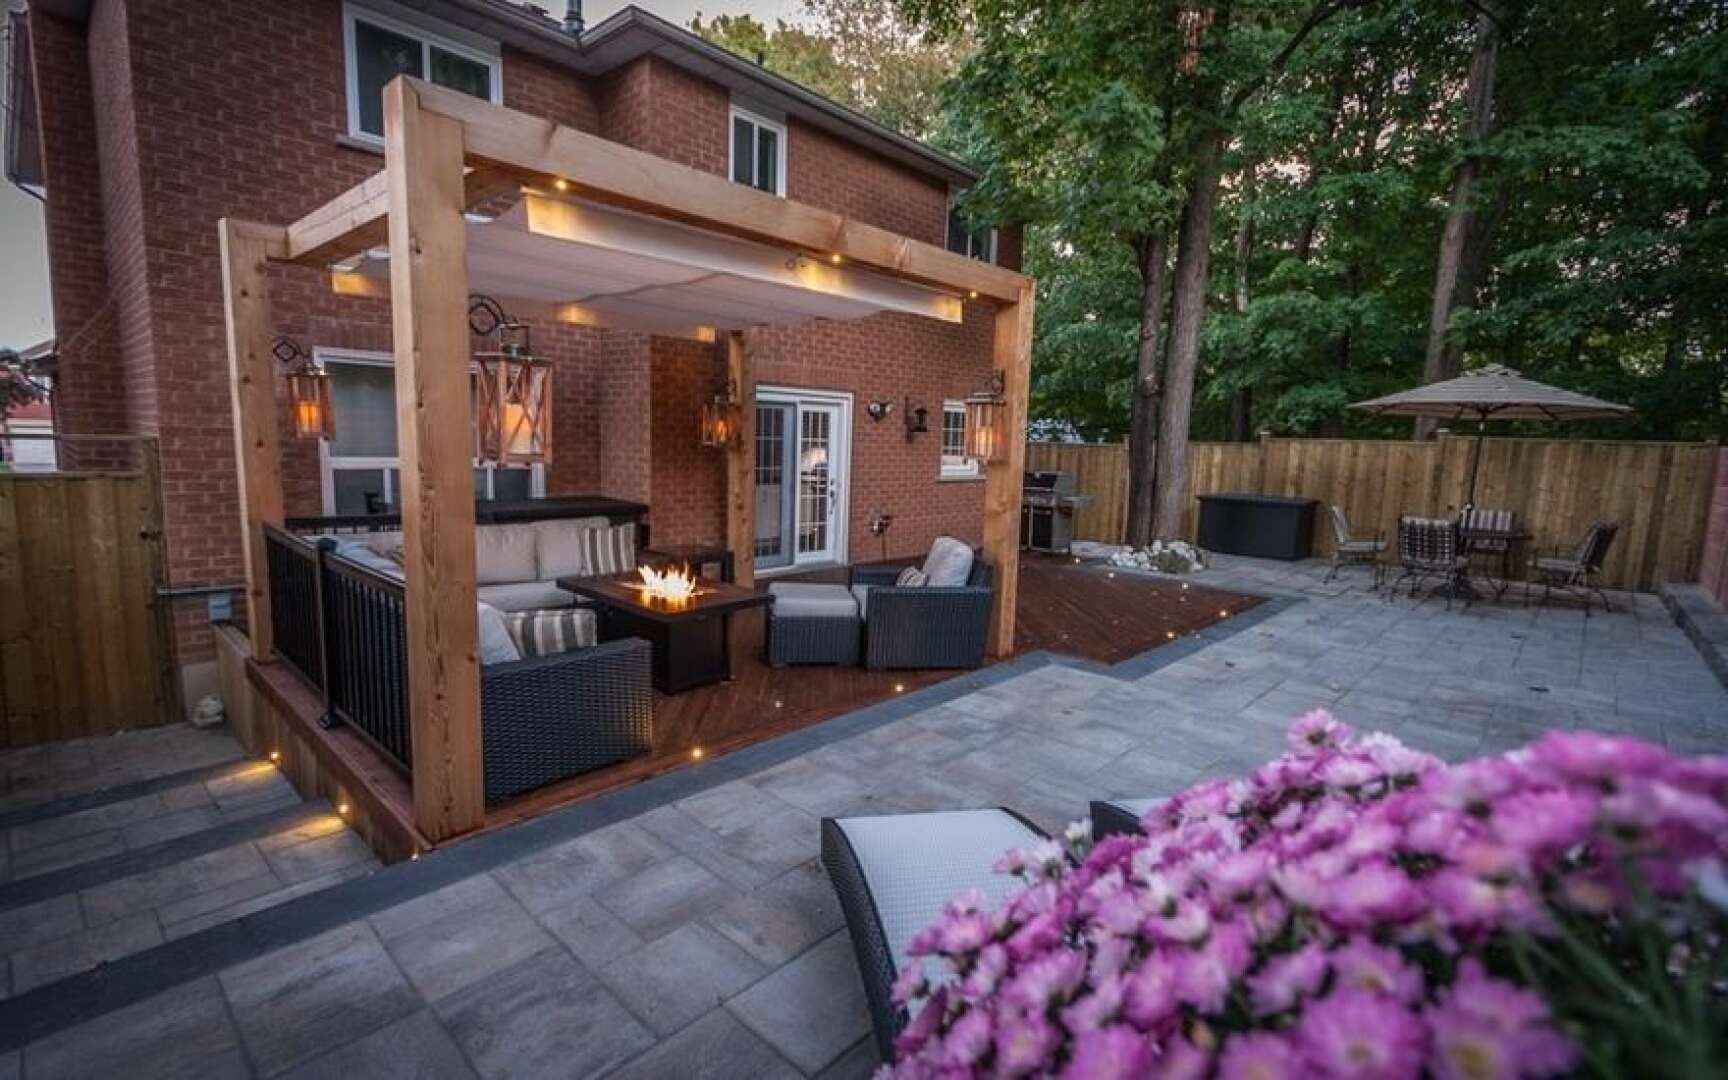 Backyard patio with outdoor seating & lighting